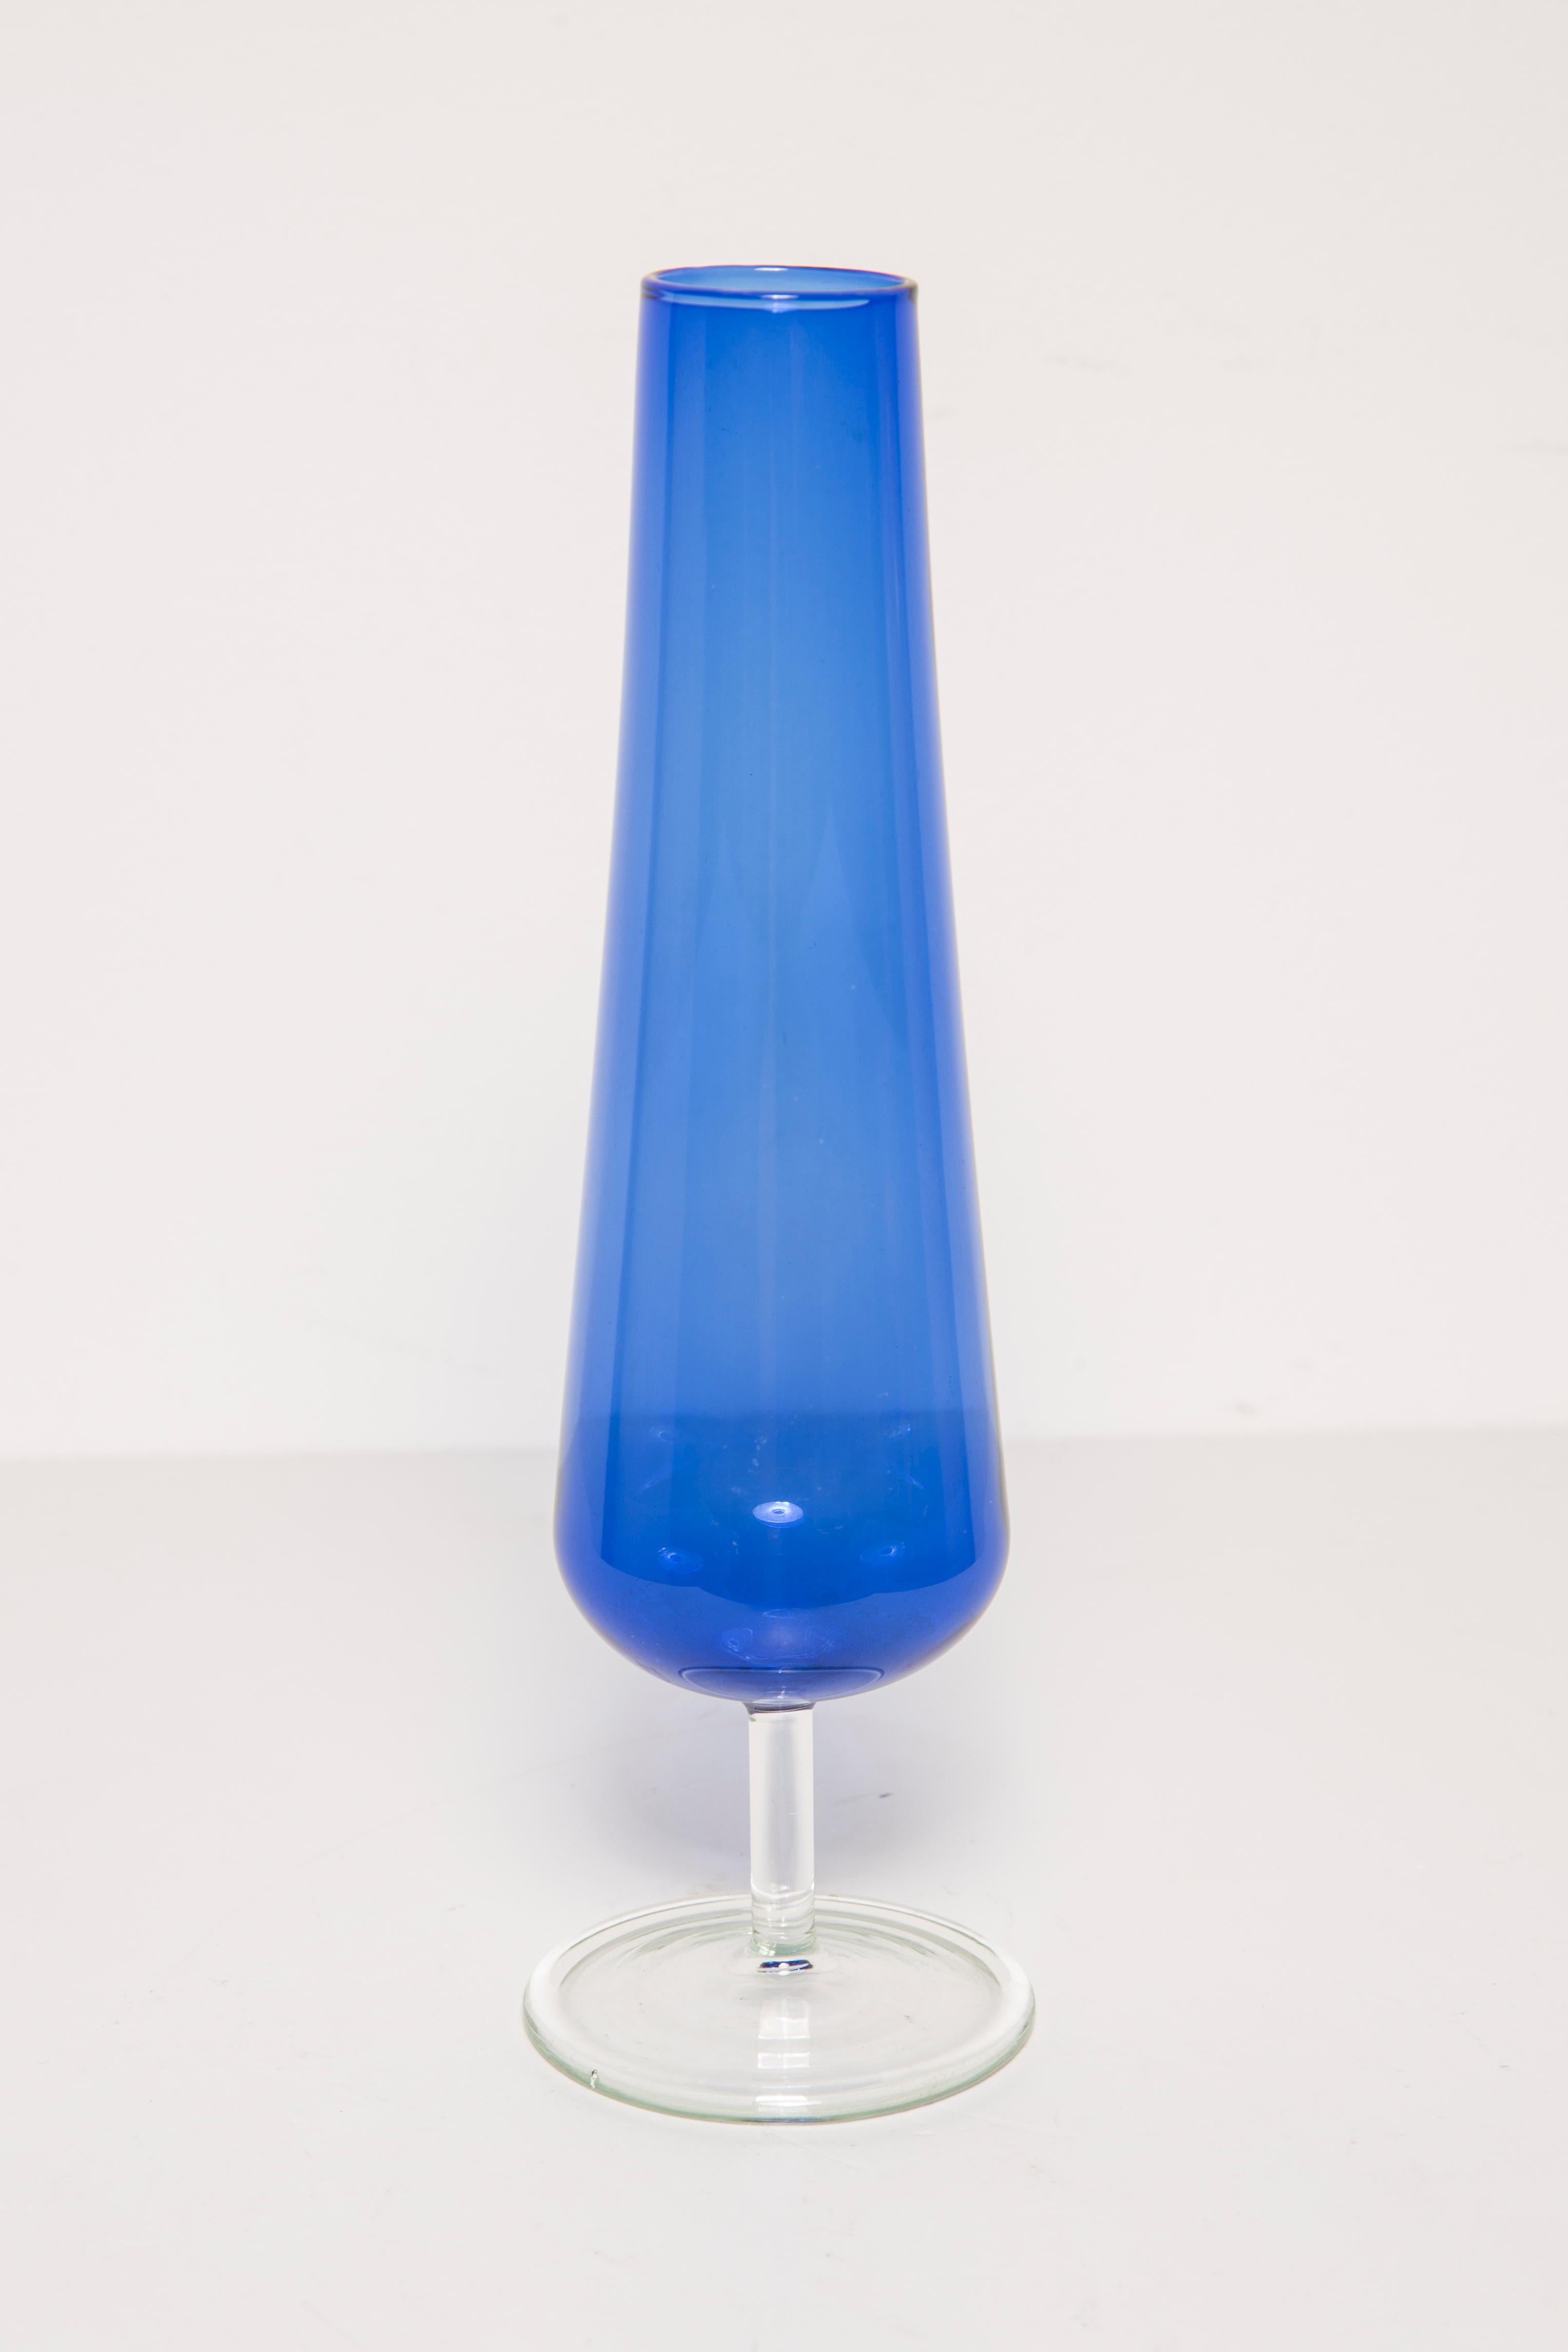 Mid Century Vintage Slim Blue Decorative Glass Vase, Europe, 1960s For Sale 1